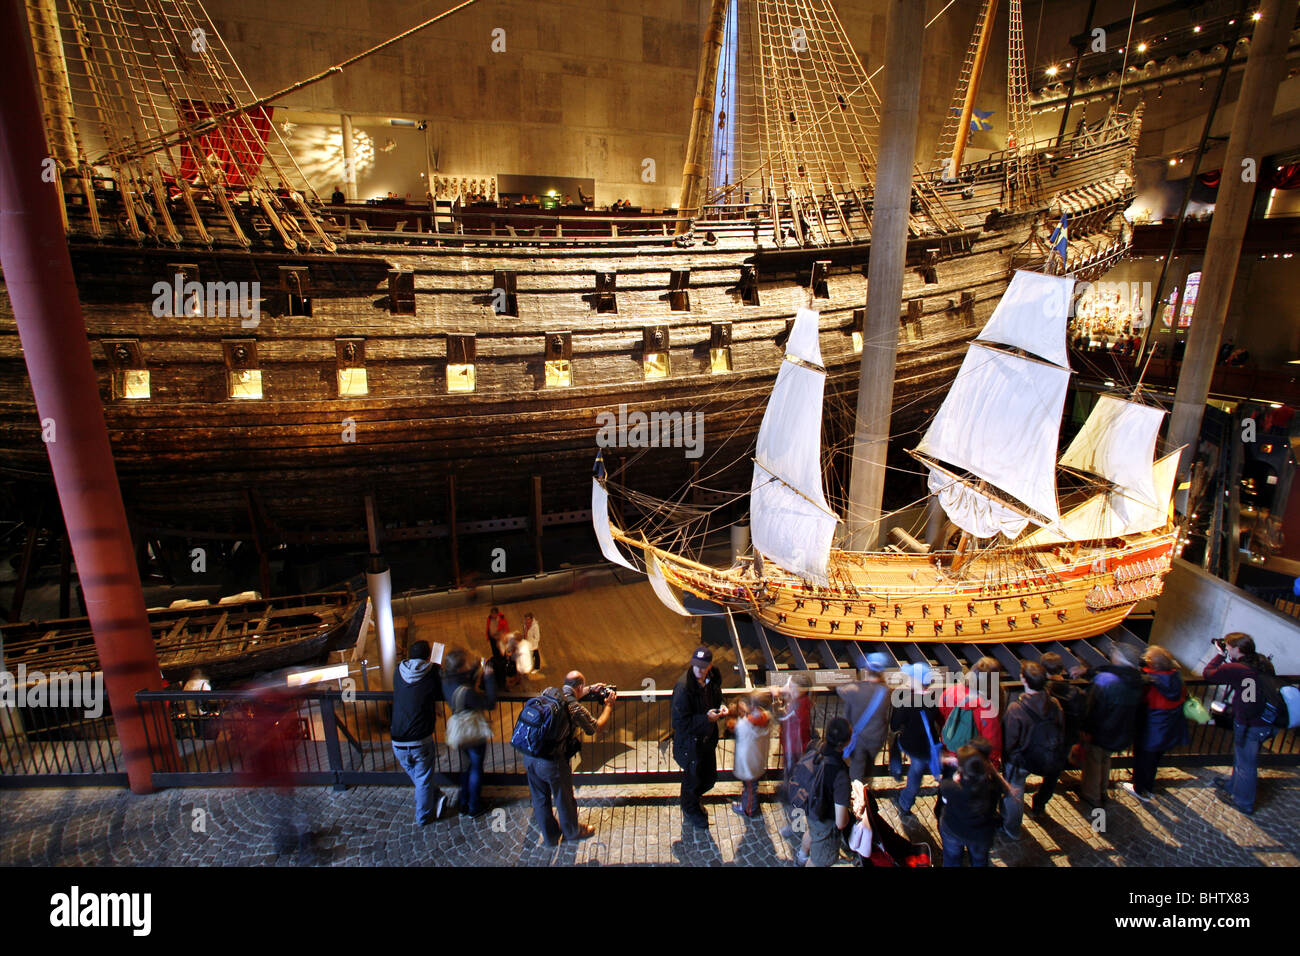 Vasa Ship Wreck and Vasa Model, Vasamuseet / Vasa Museum, Djurgården, Stockholm, Sweden Stock Photo